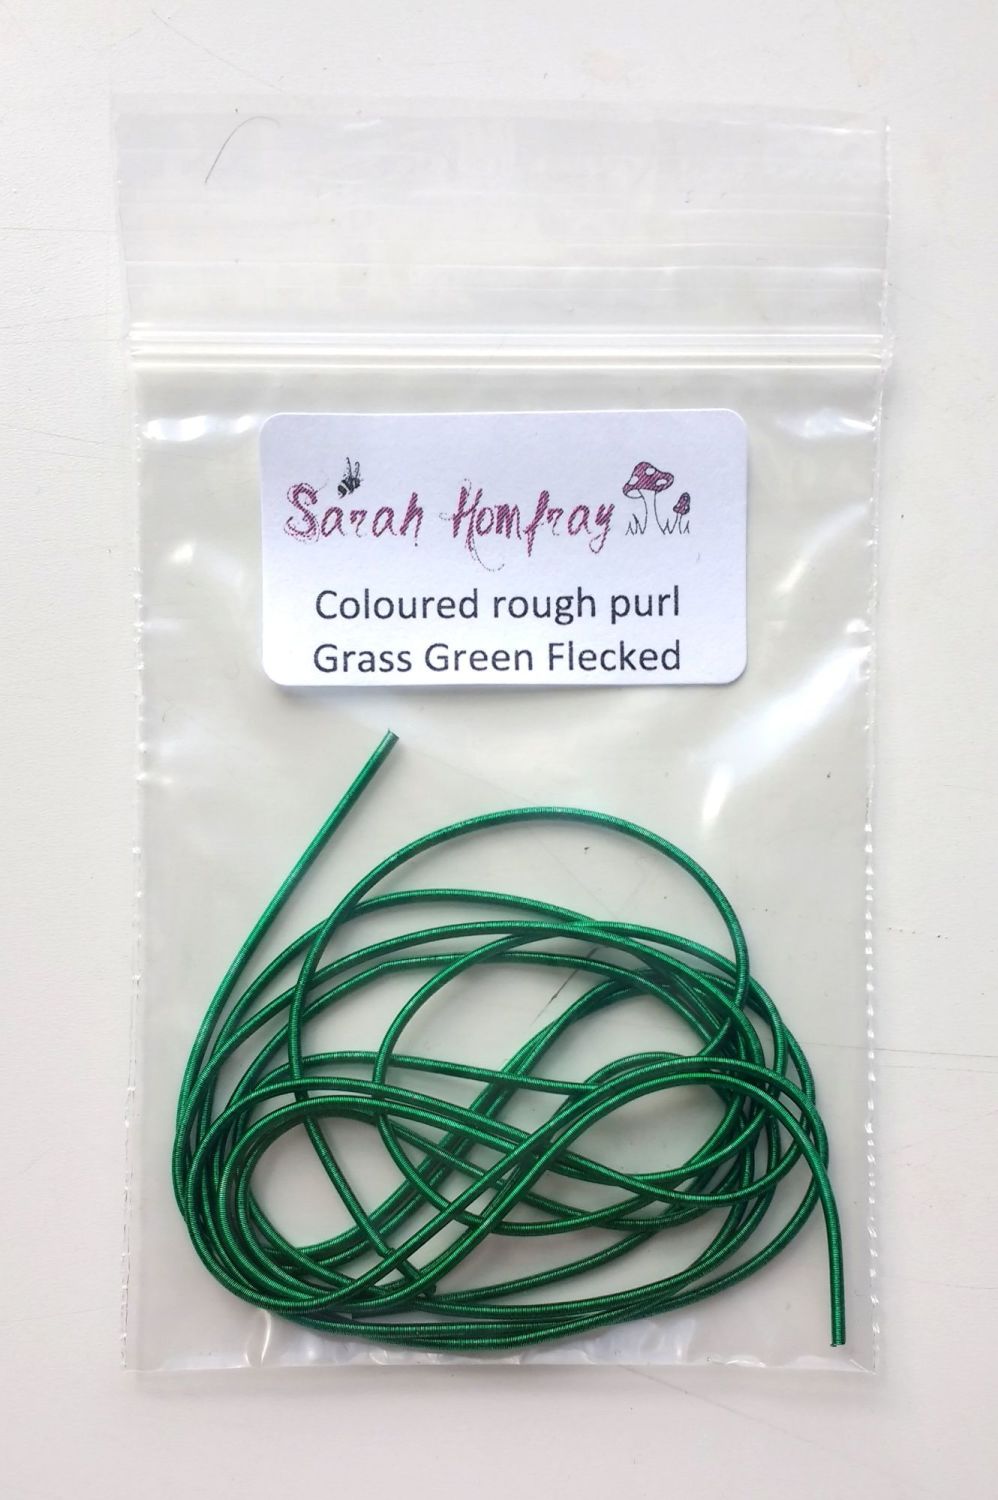 NEW! Coloured Rough purl no.6 - Grass Green Flecked